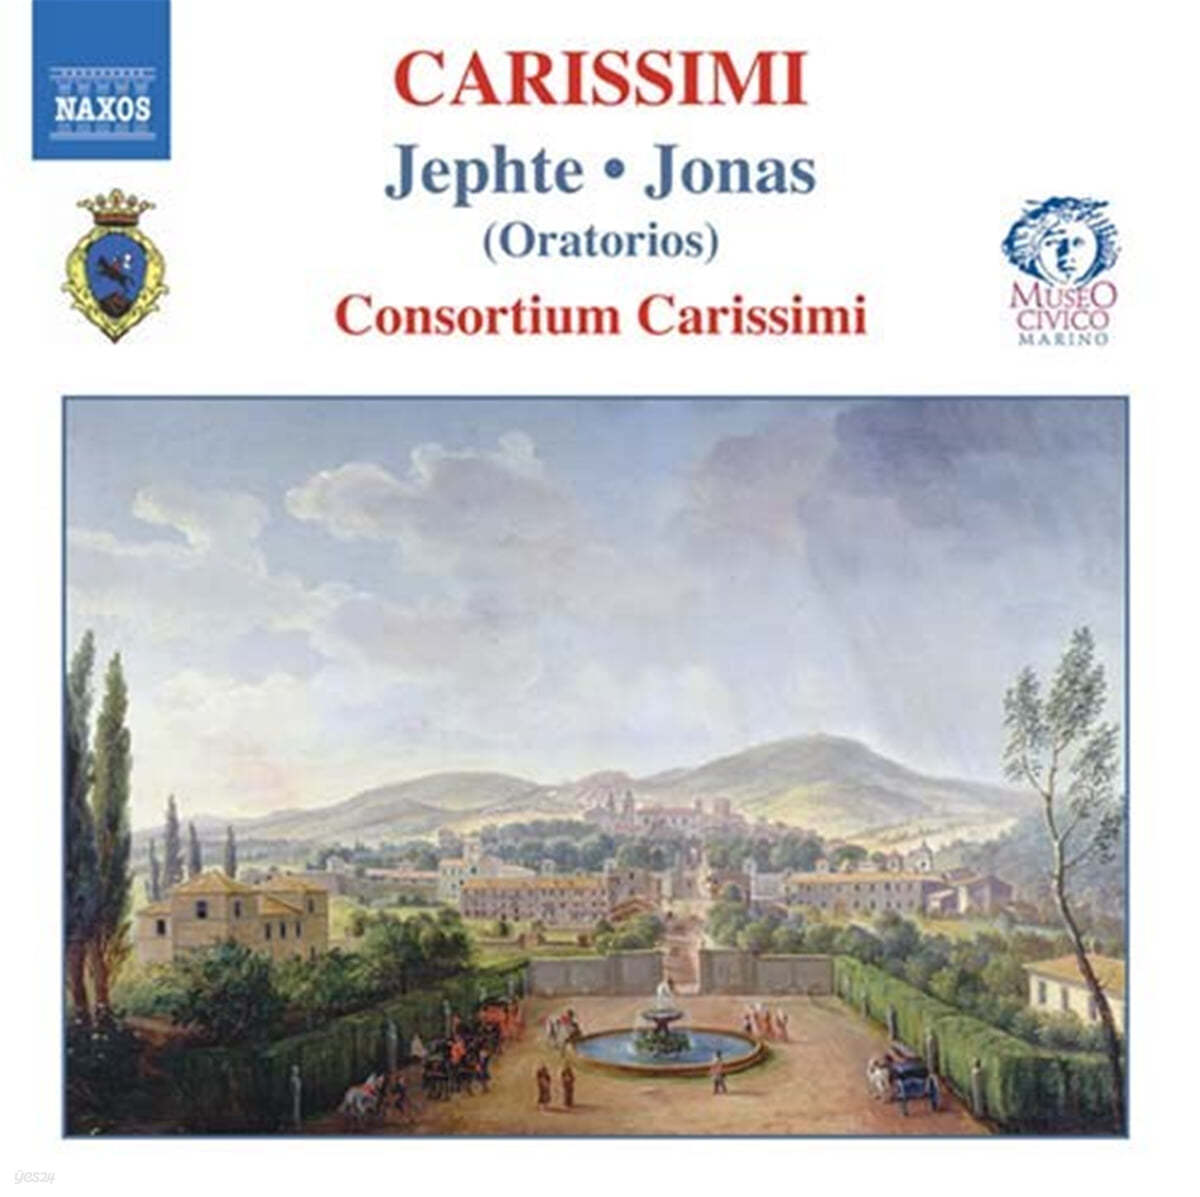 Consortium Carissimi 지아코모 카리시미: 오라토리오 - 히스토리아 디 예프테 (Giacomo Carissimi : Historia di Jephte)